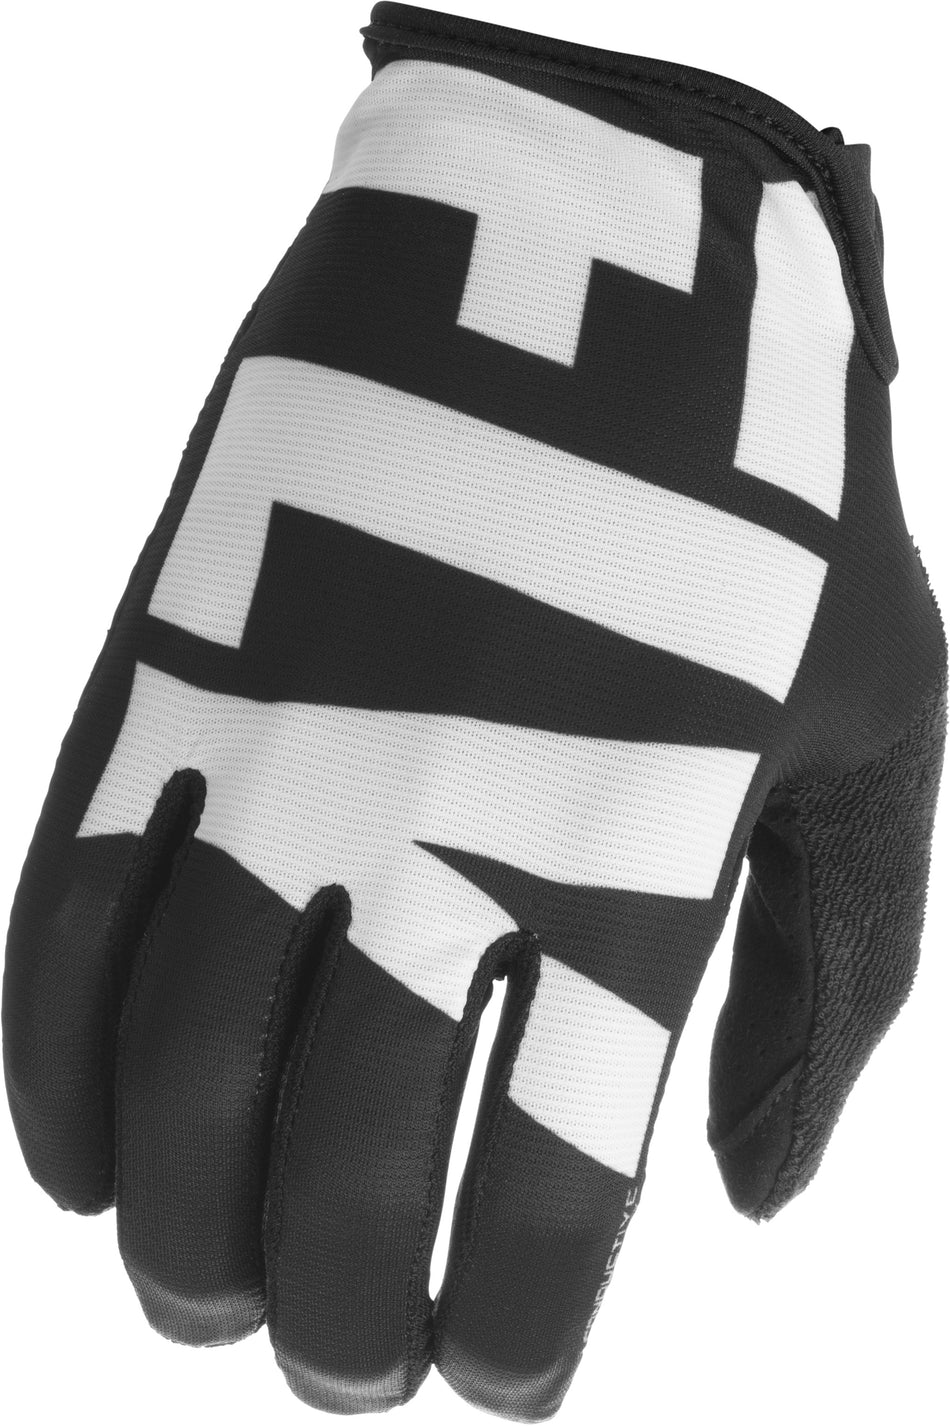 FLY RACING Media Gloves Black/White Sz 08 350-10408